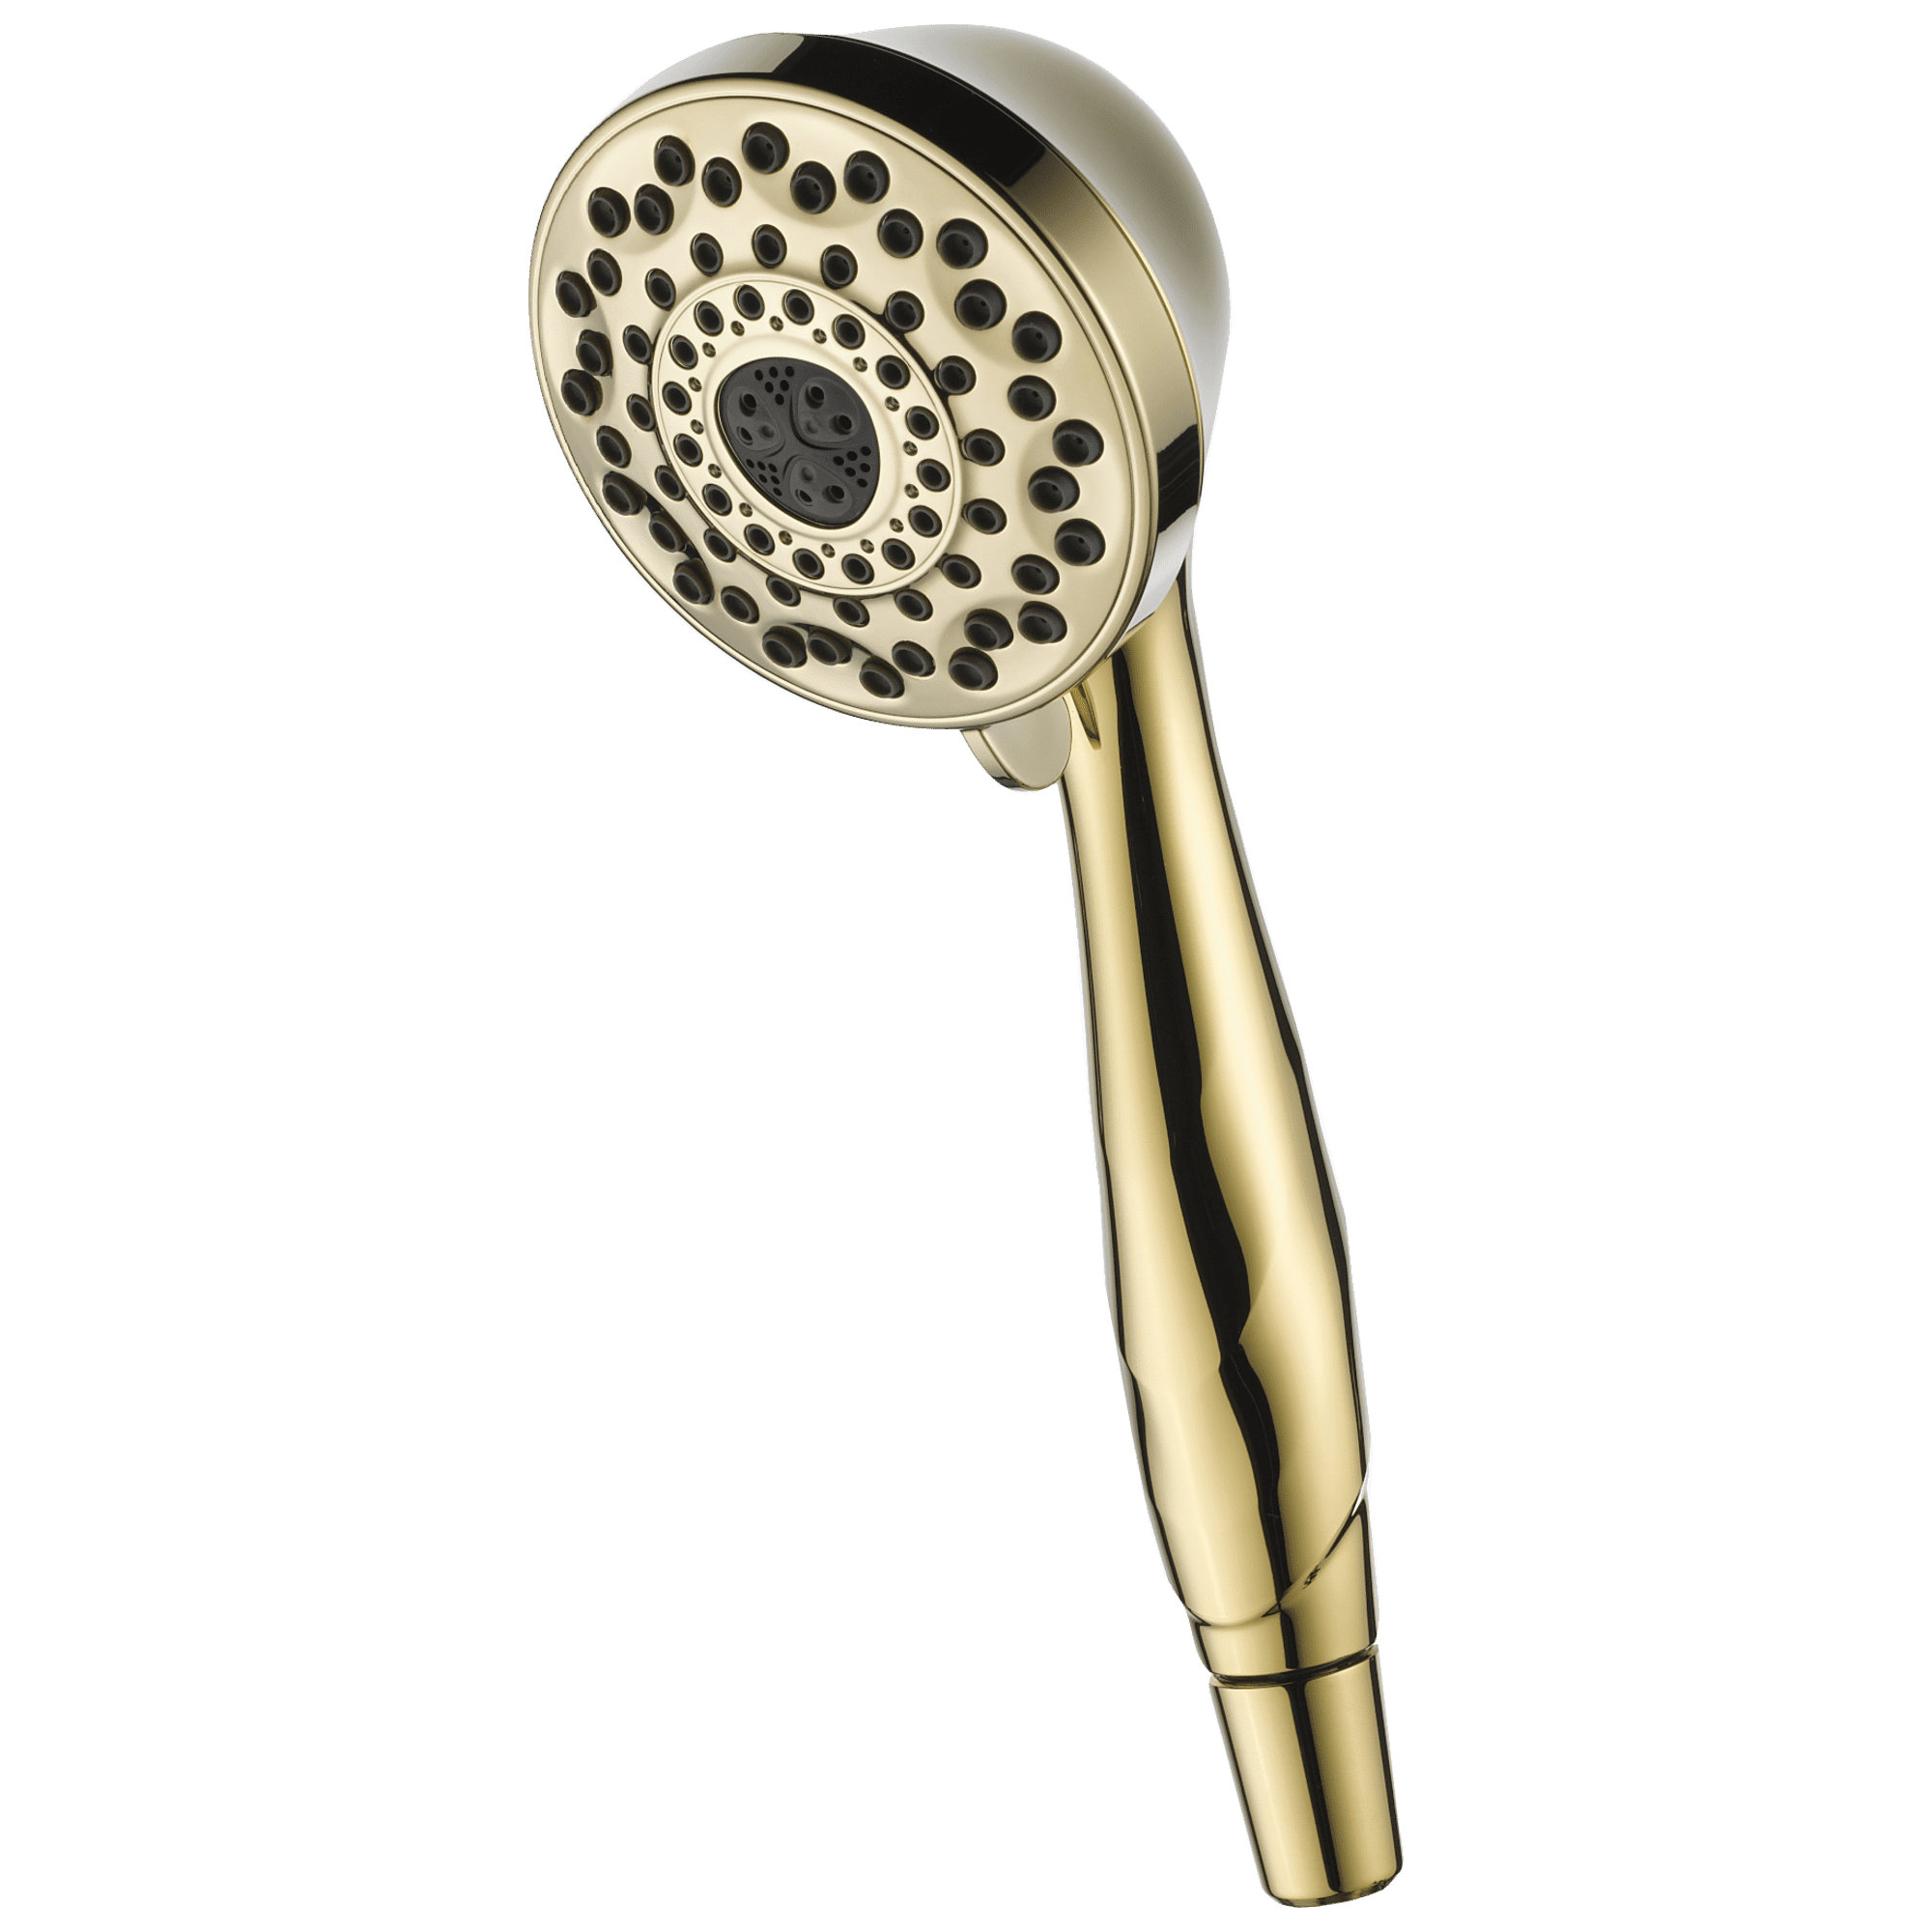 59426-pb-pk Polished Brass 7-setting Hand Shower